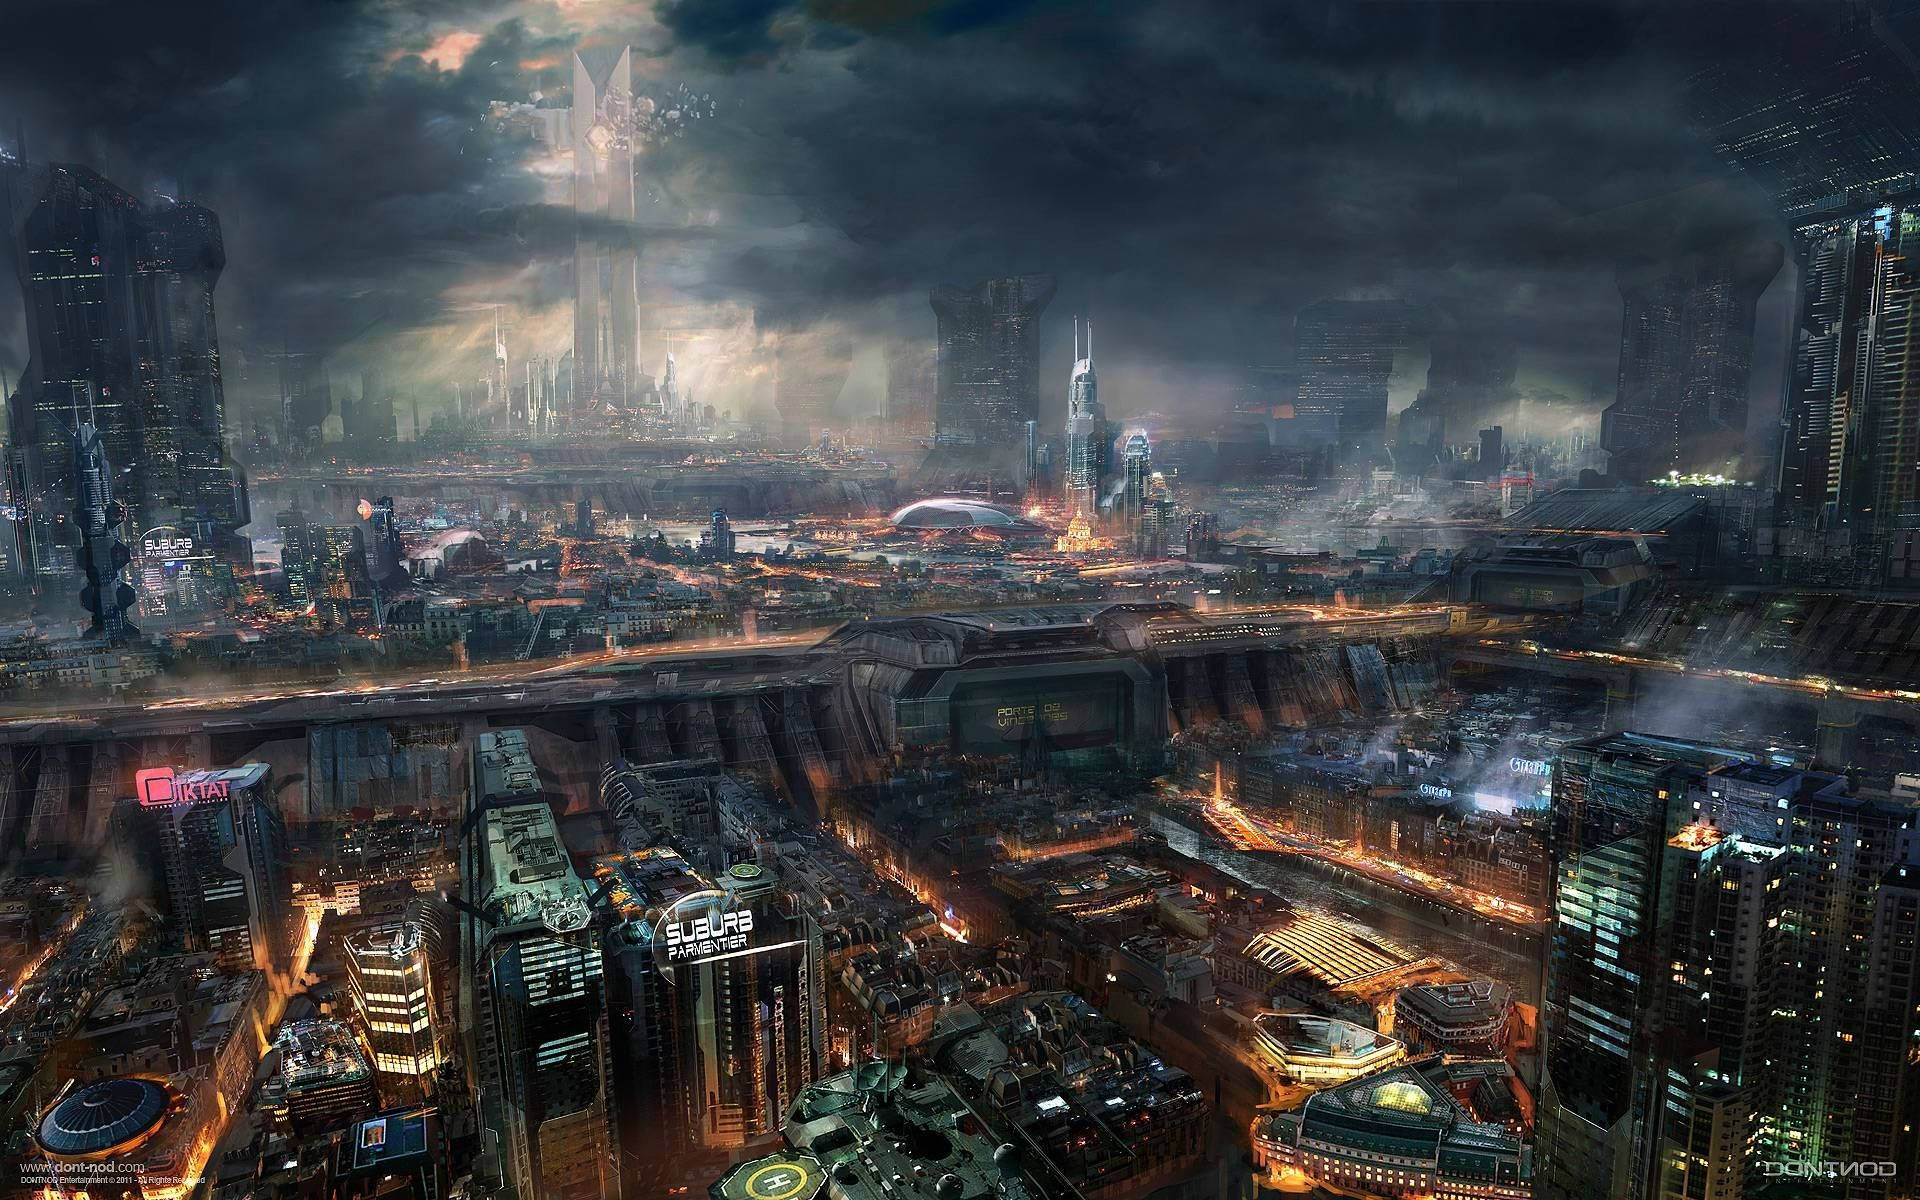 Schematic View of the Dystopian Landscape in Cyberpunk Wallpaper